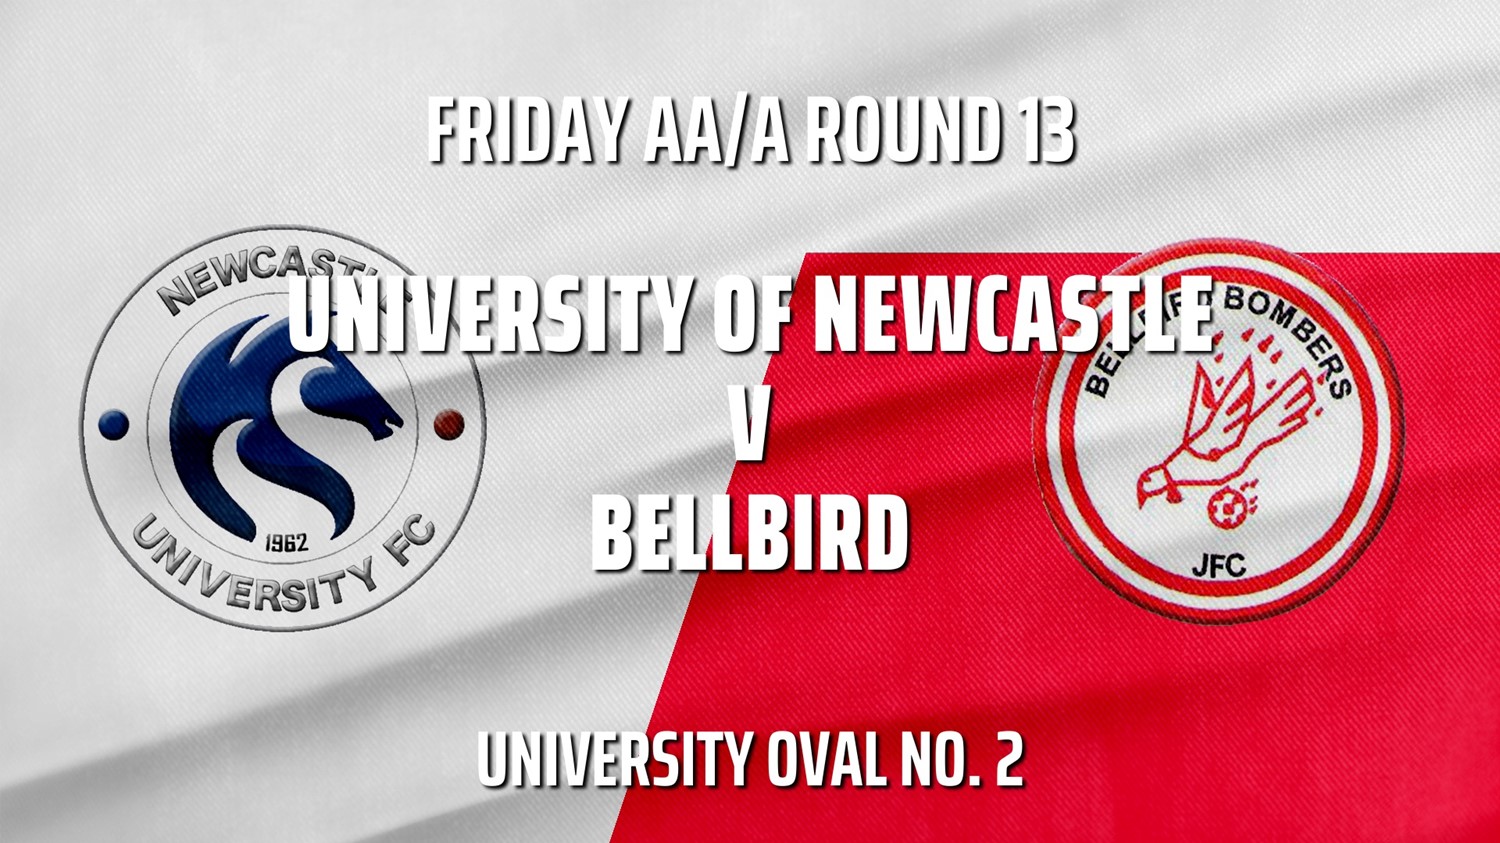 210730-Friday AA/A Round 13 - Univeristy of Newcastle  v Bellbird Slate Image